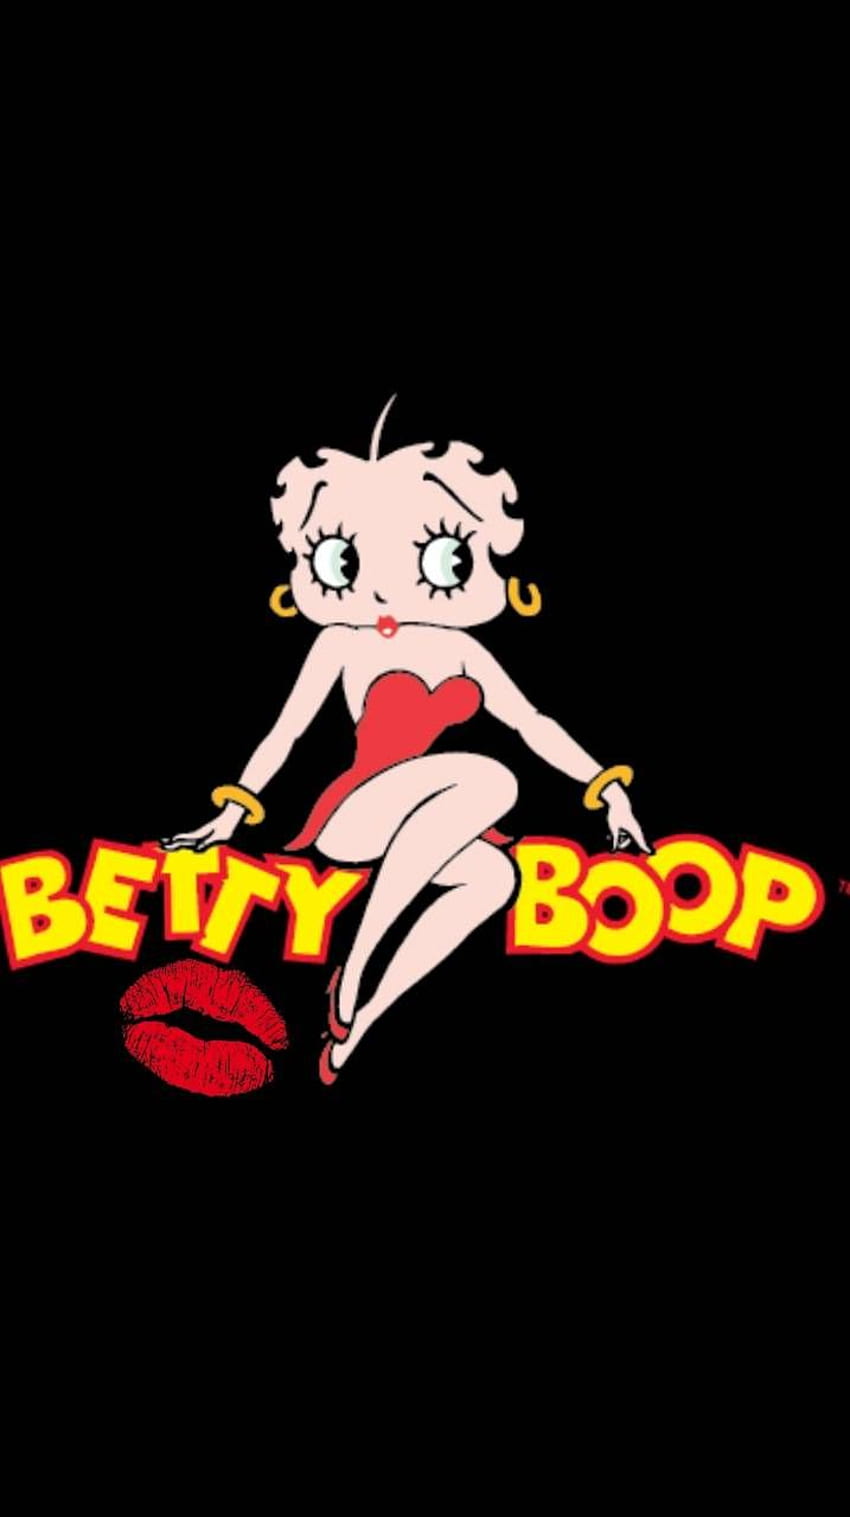 Betty boop HD phone wallpaper